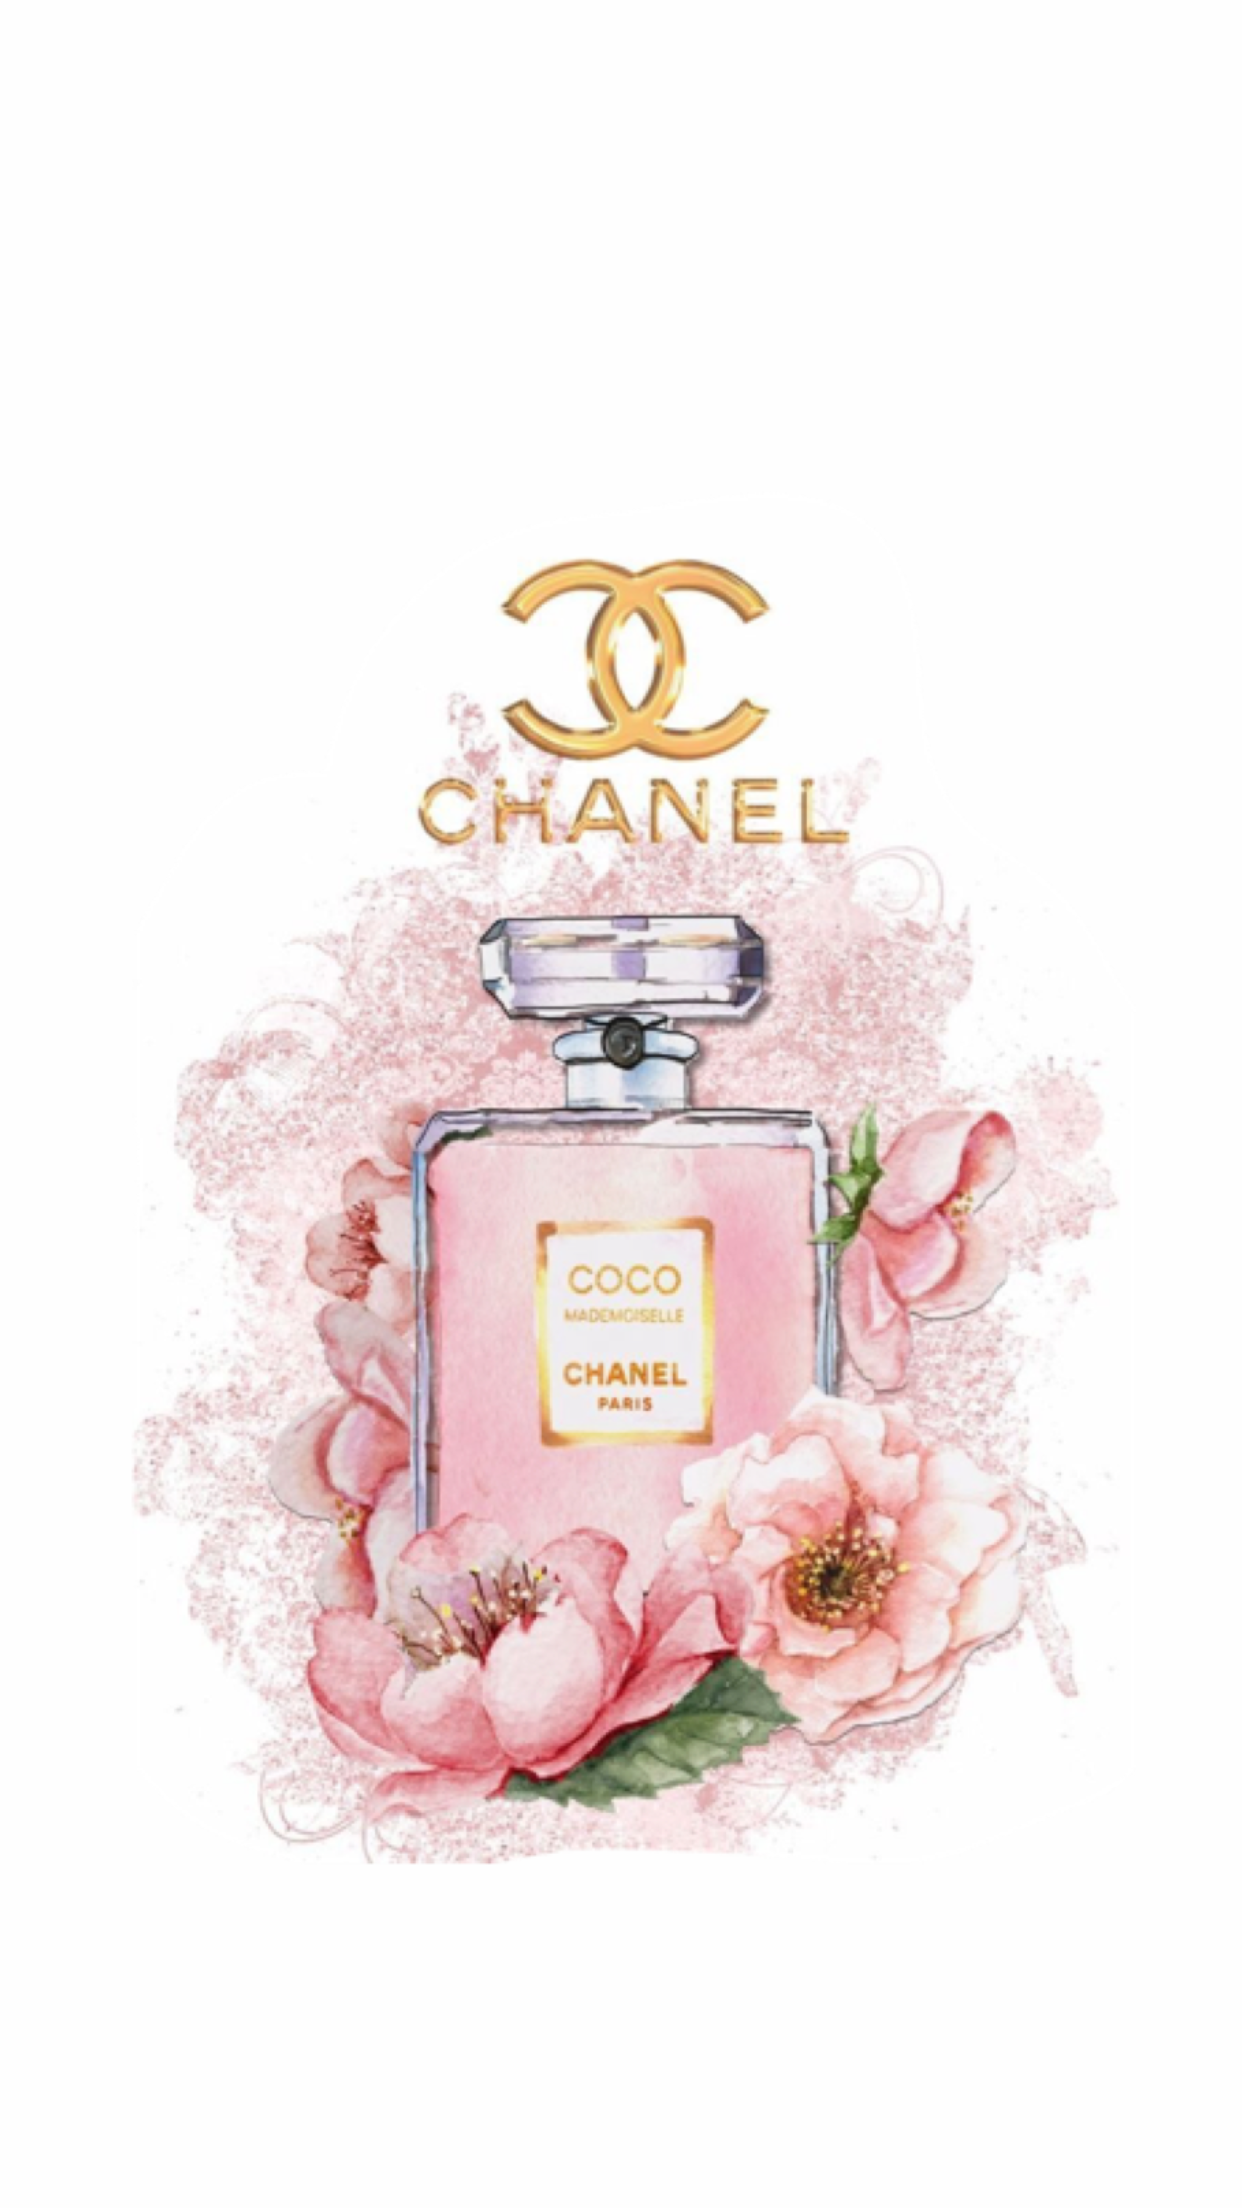 Coco Chanel Perfume Wallpaper Free Coco Chanel Perfume Background